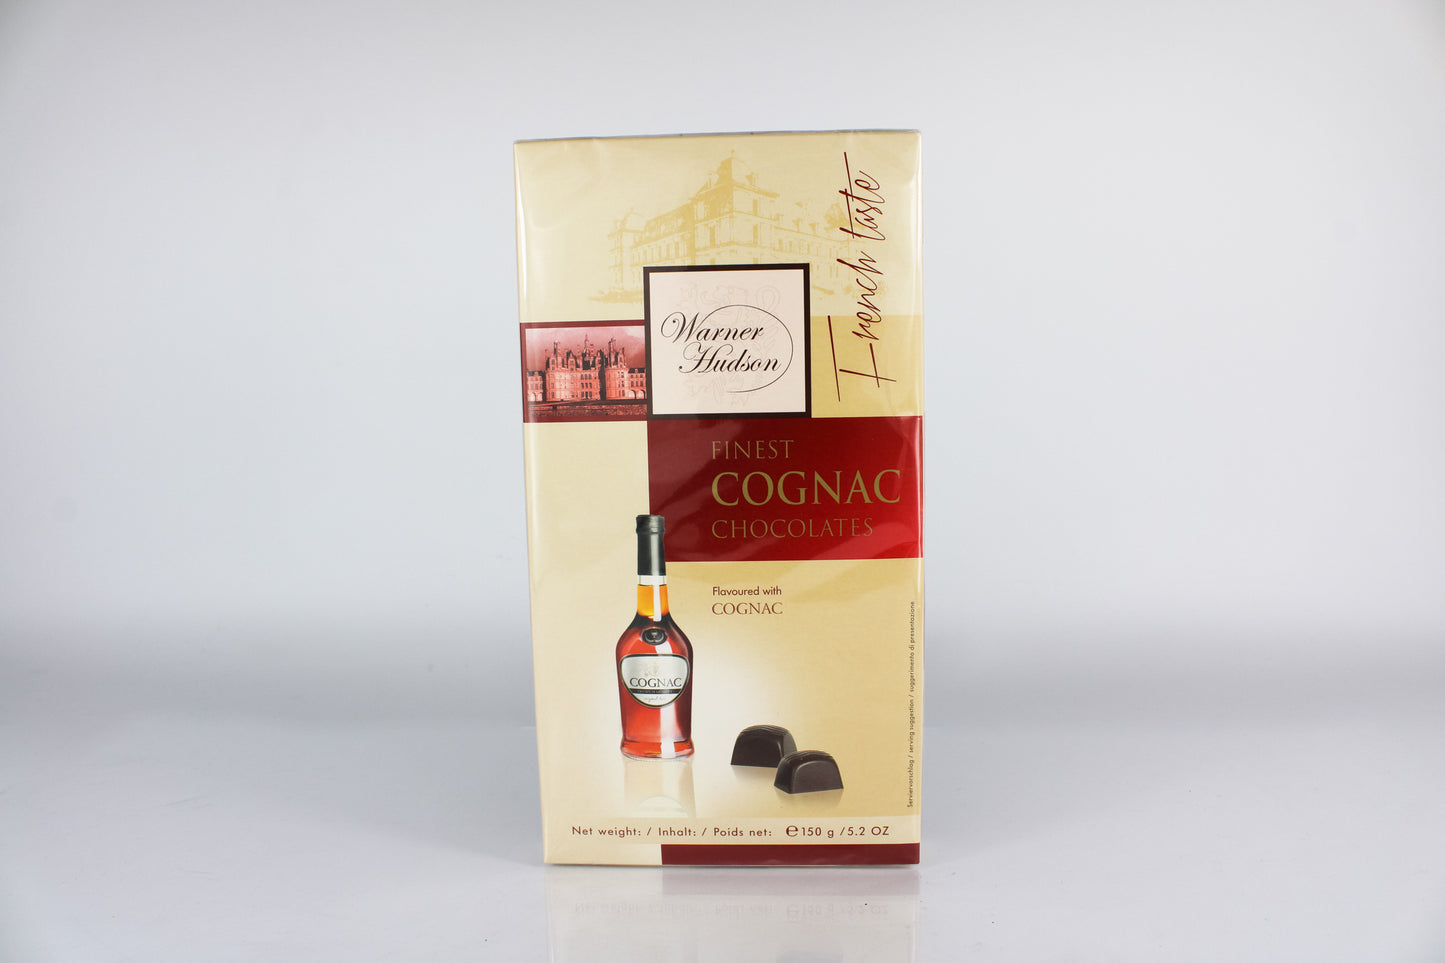 Warner Hudson Finest Cognac Chocolates